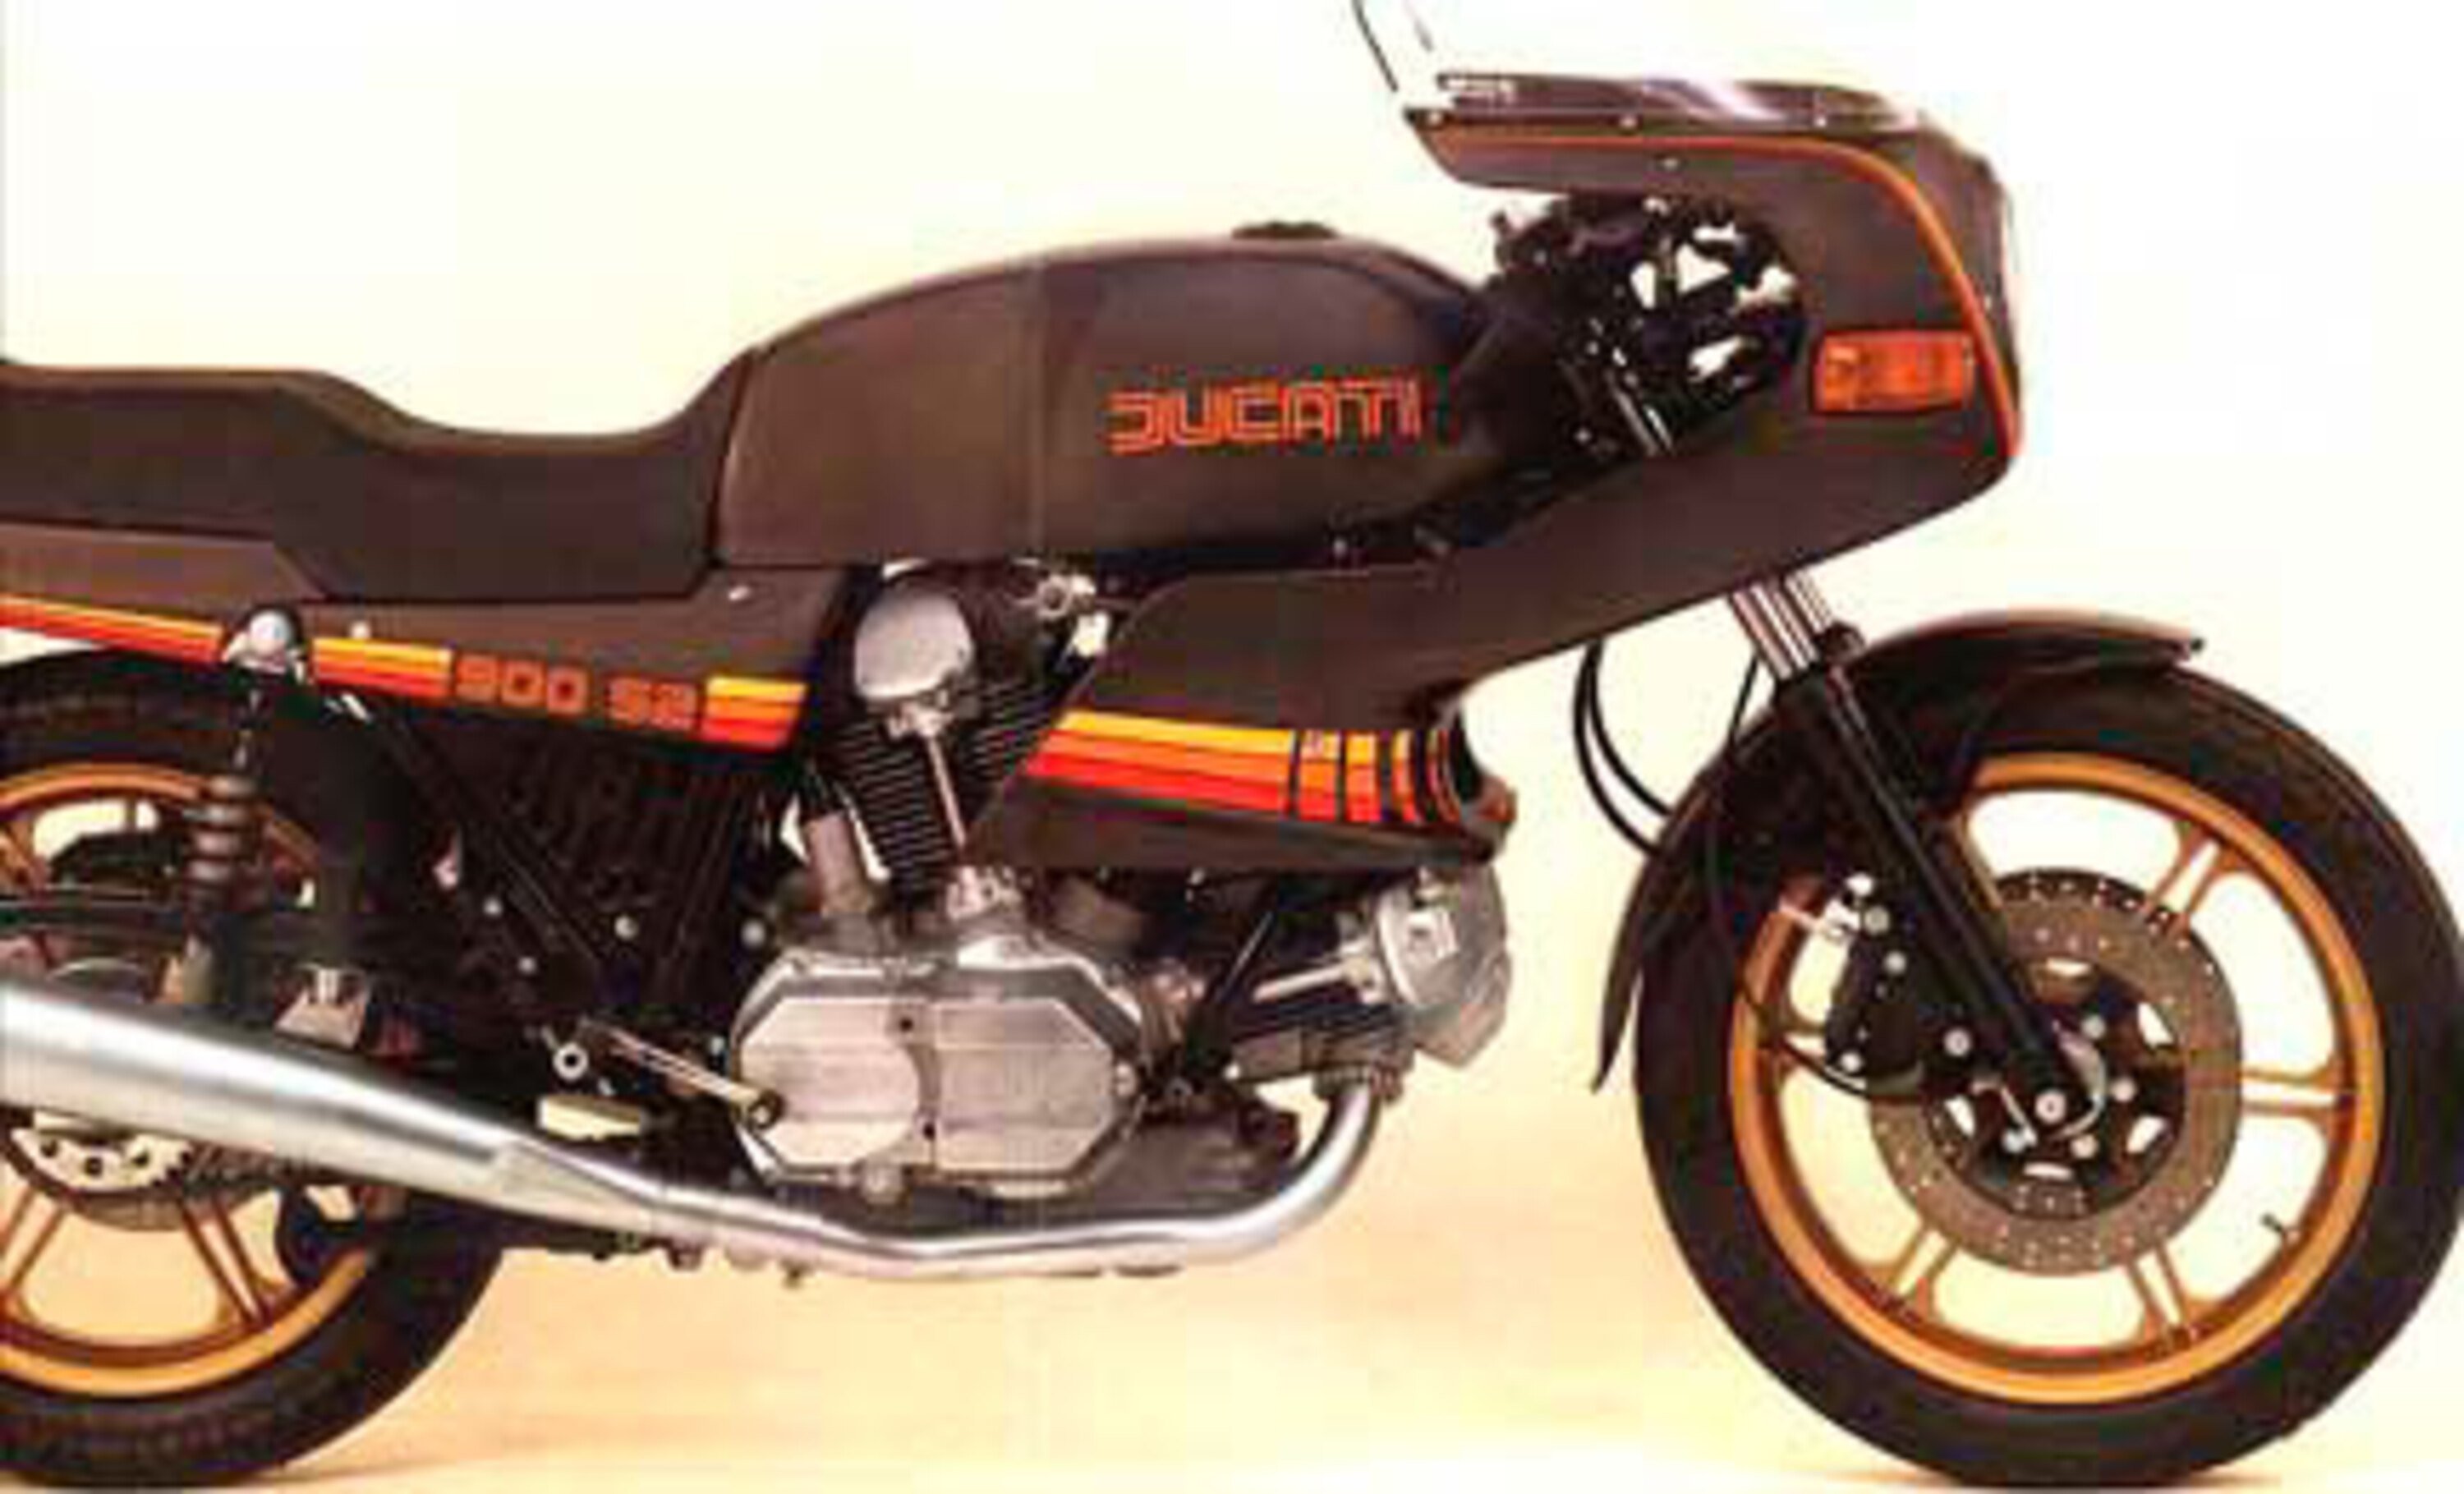 Ducati 900 S2 900 S2